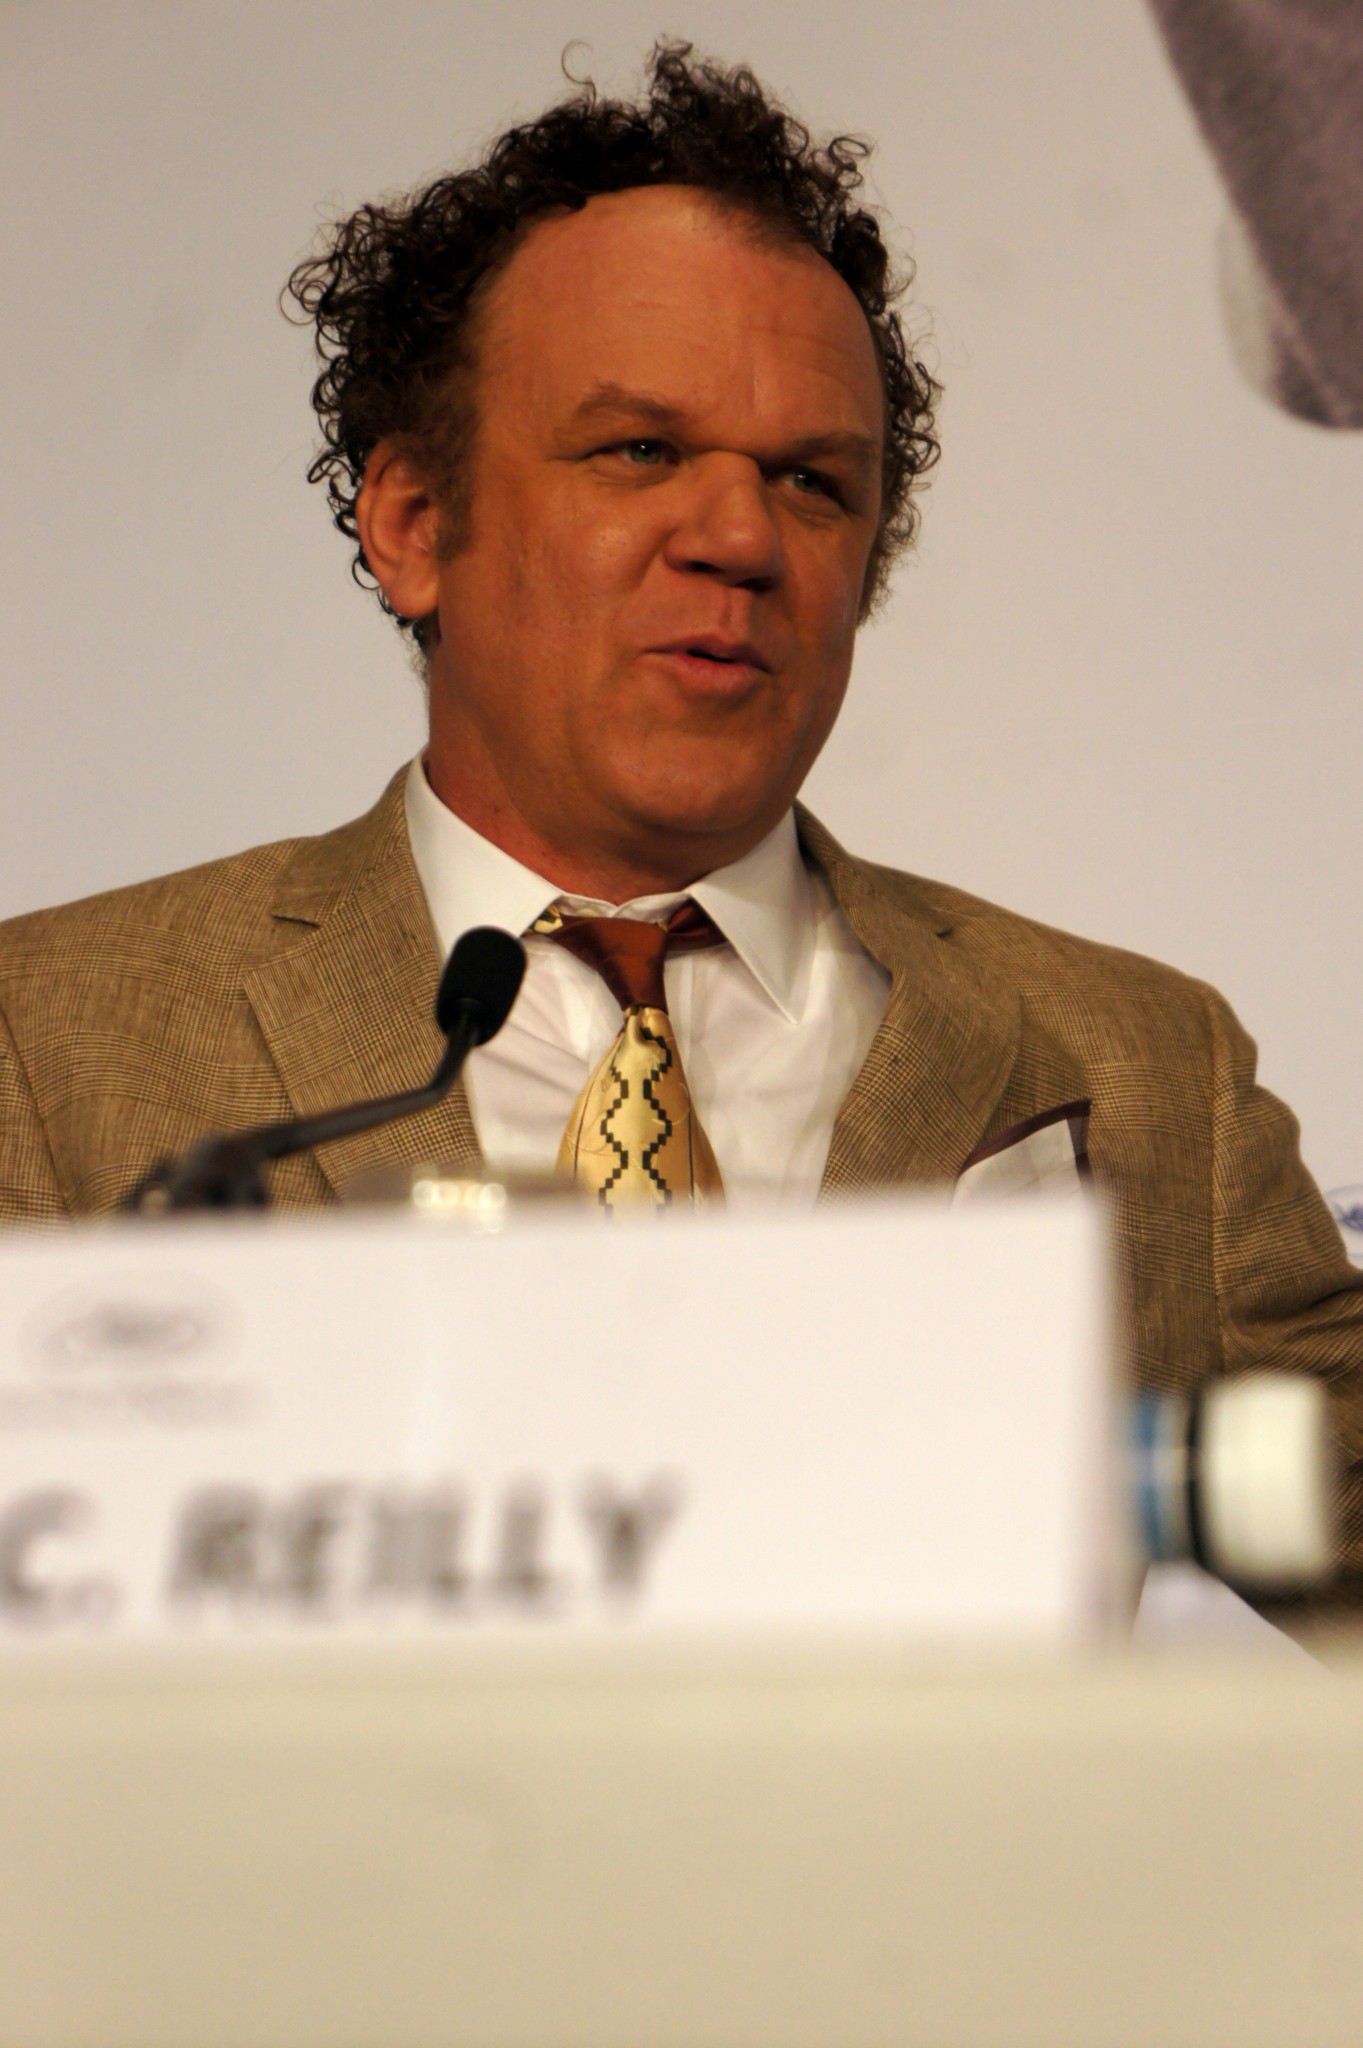 John C Reilly